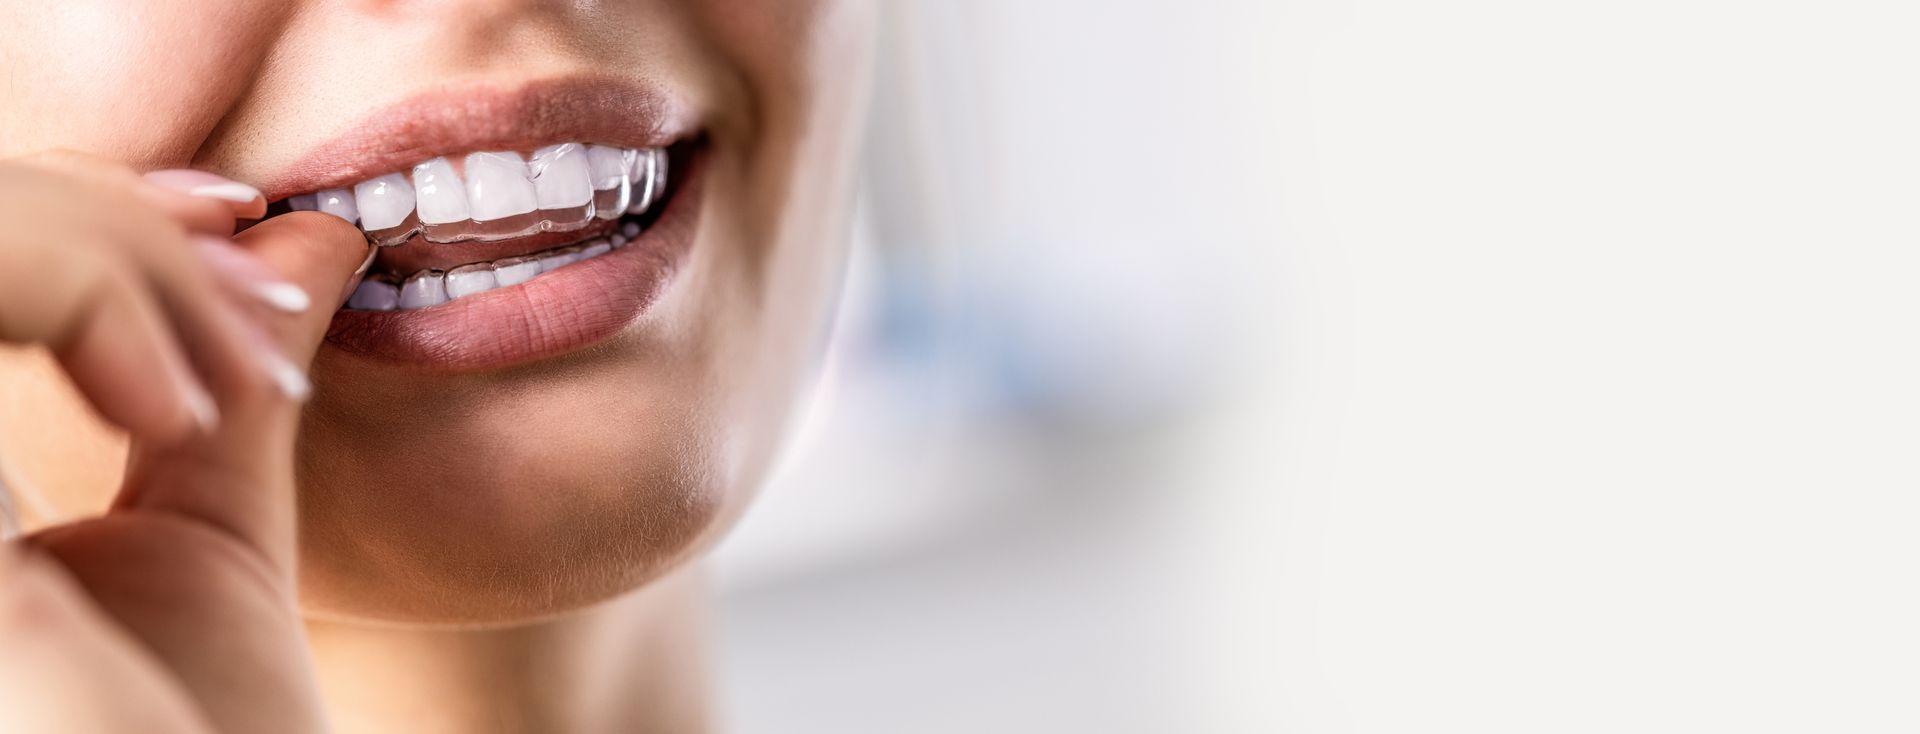 Woman Using Invisalign Retainers to Straightening Teeth,